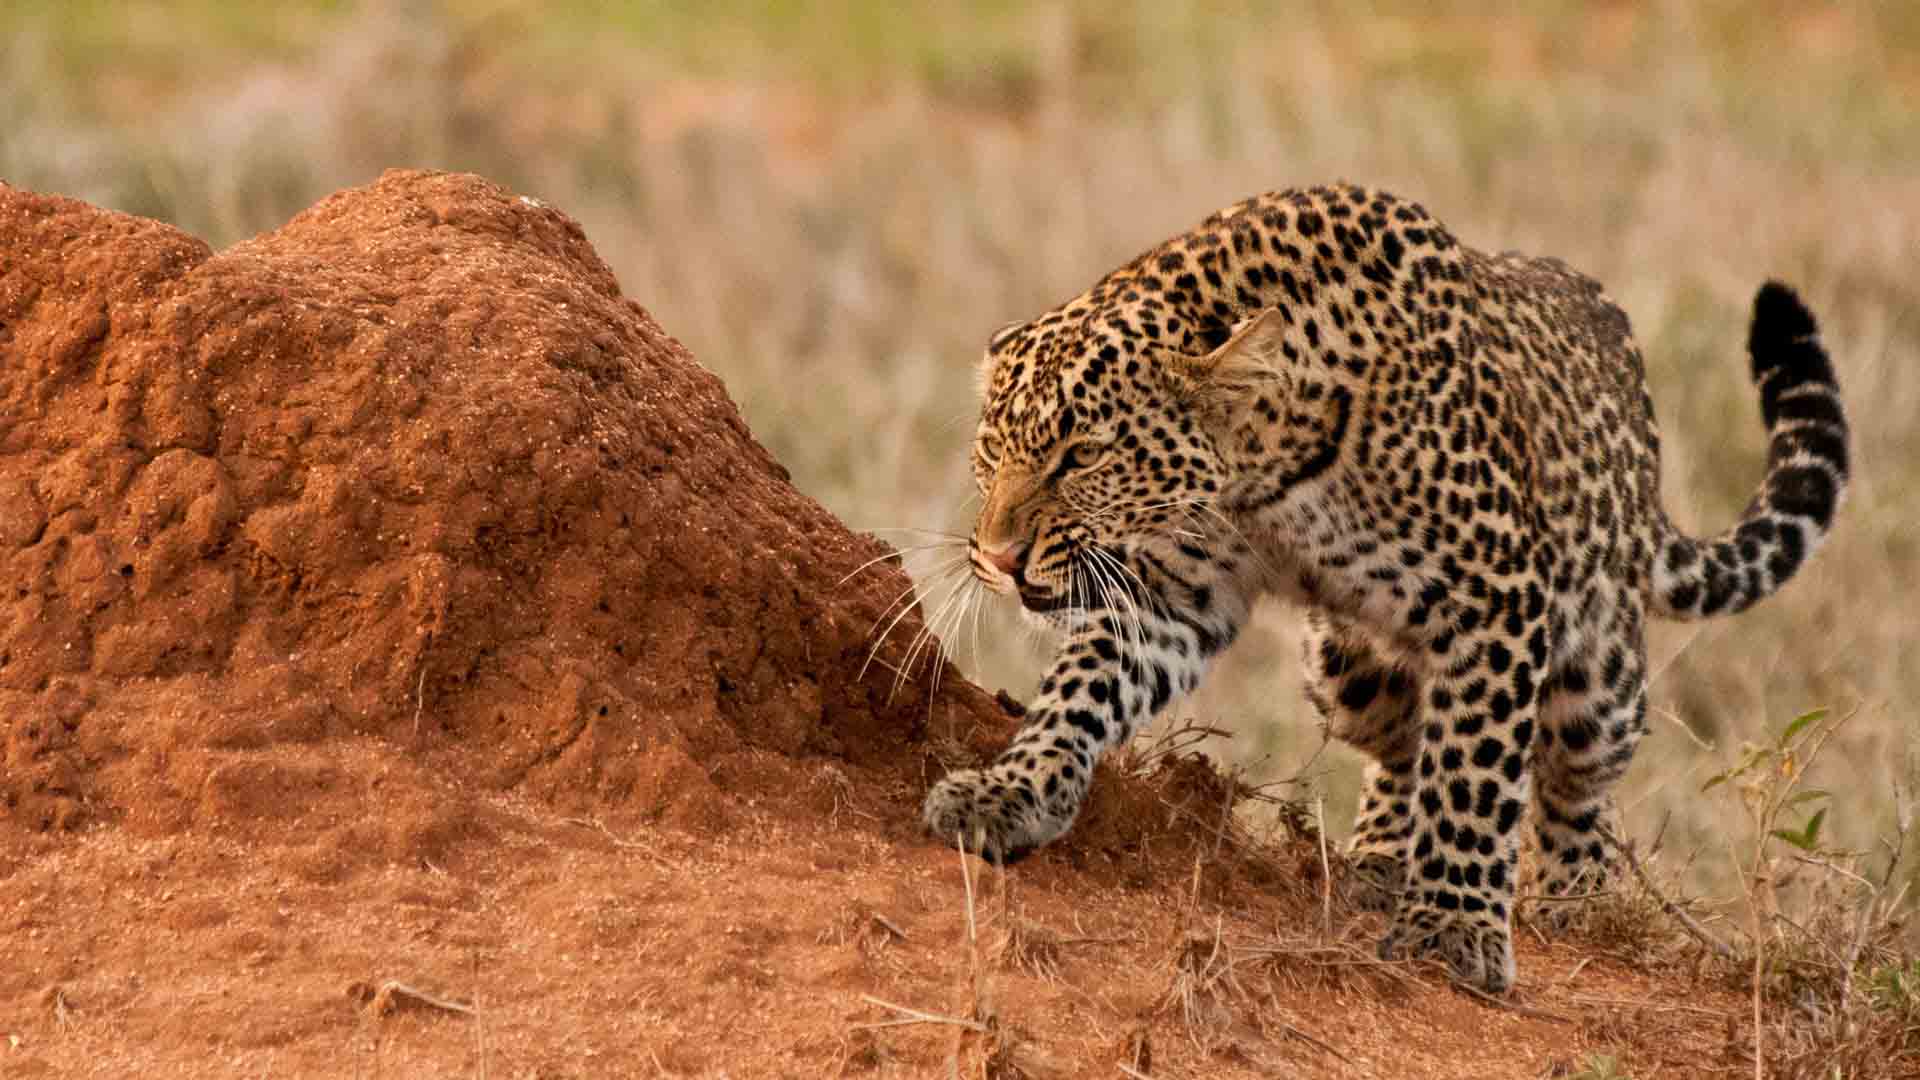 Spotting a Leopard on a Kenya Safari | Kenya wildlife Safari | Kenya